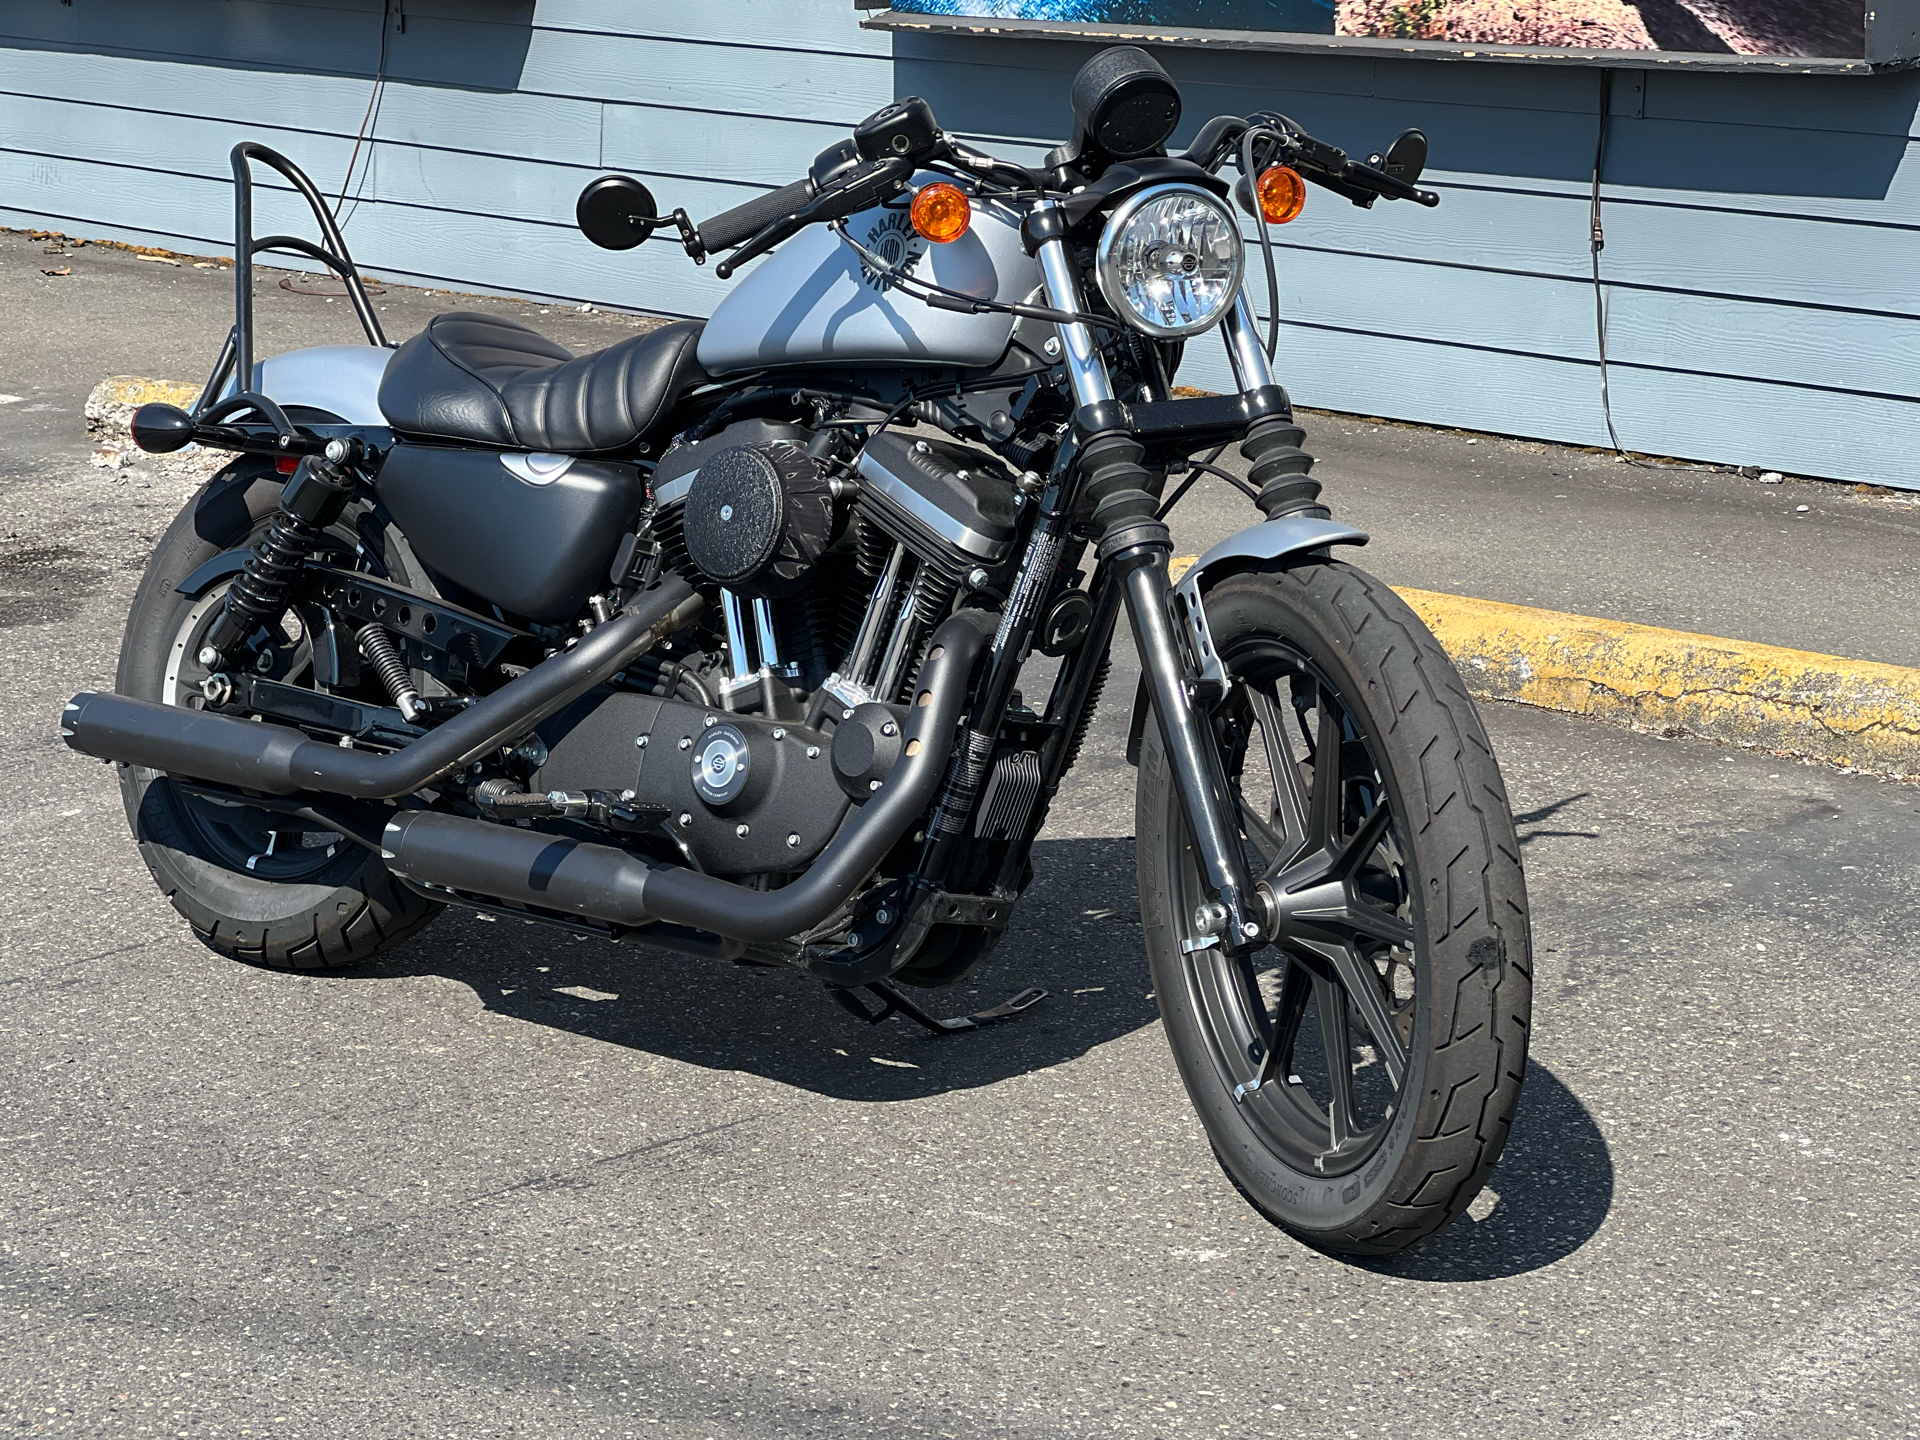 2020 Harley-Davidson Iron 883™ in Bellingham, Washington - Photo 2